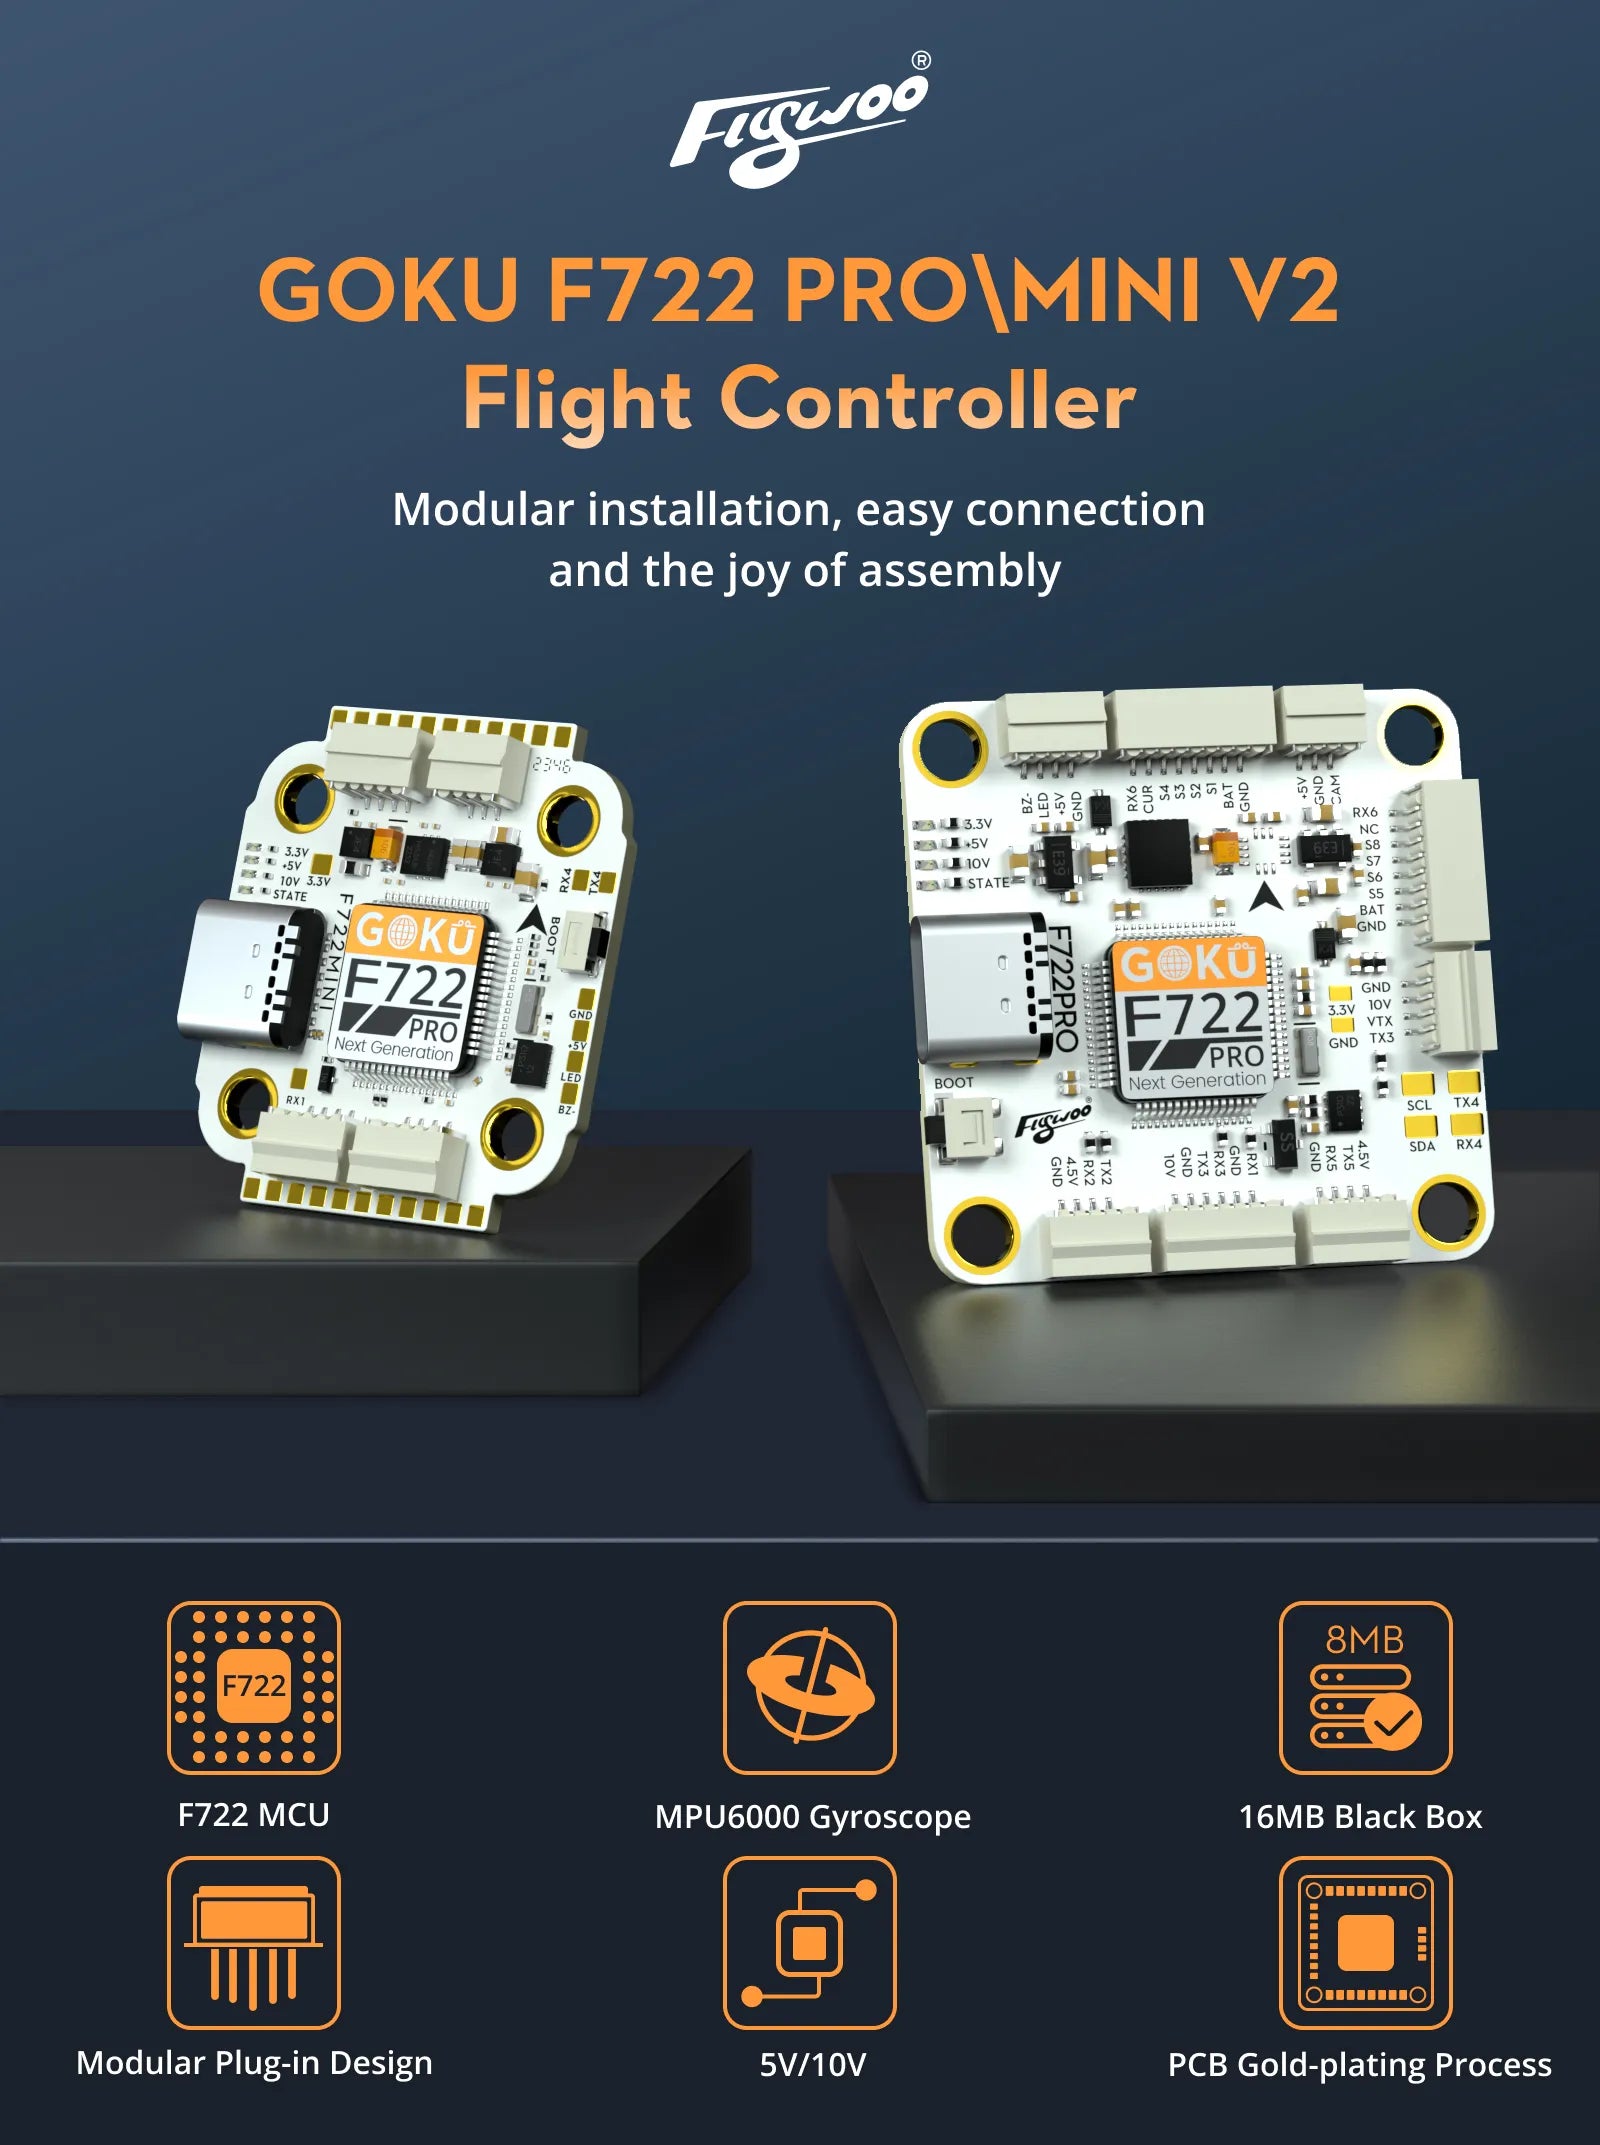 Flywoo Goku F722 Pro V2 30x30 Flight Controller (MPU6000)